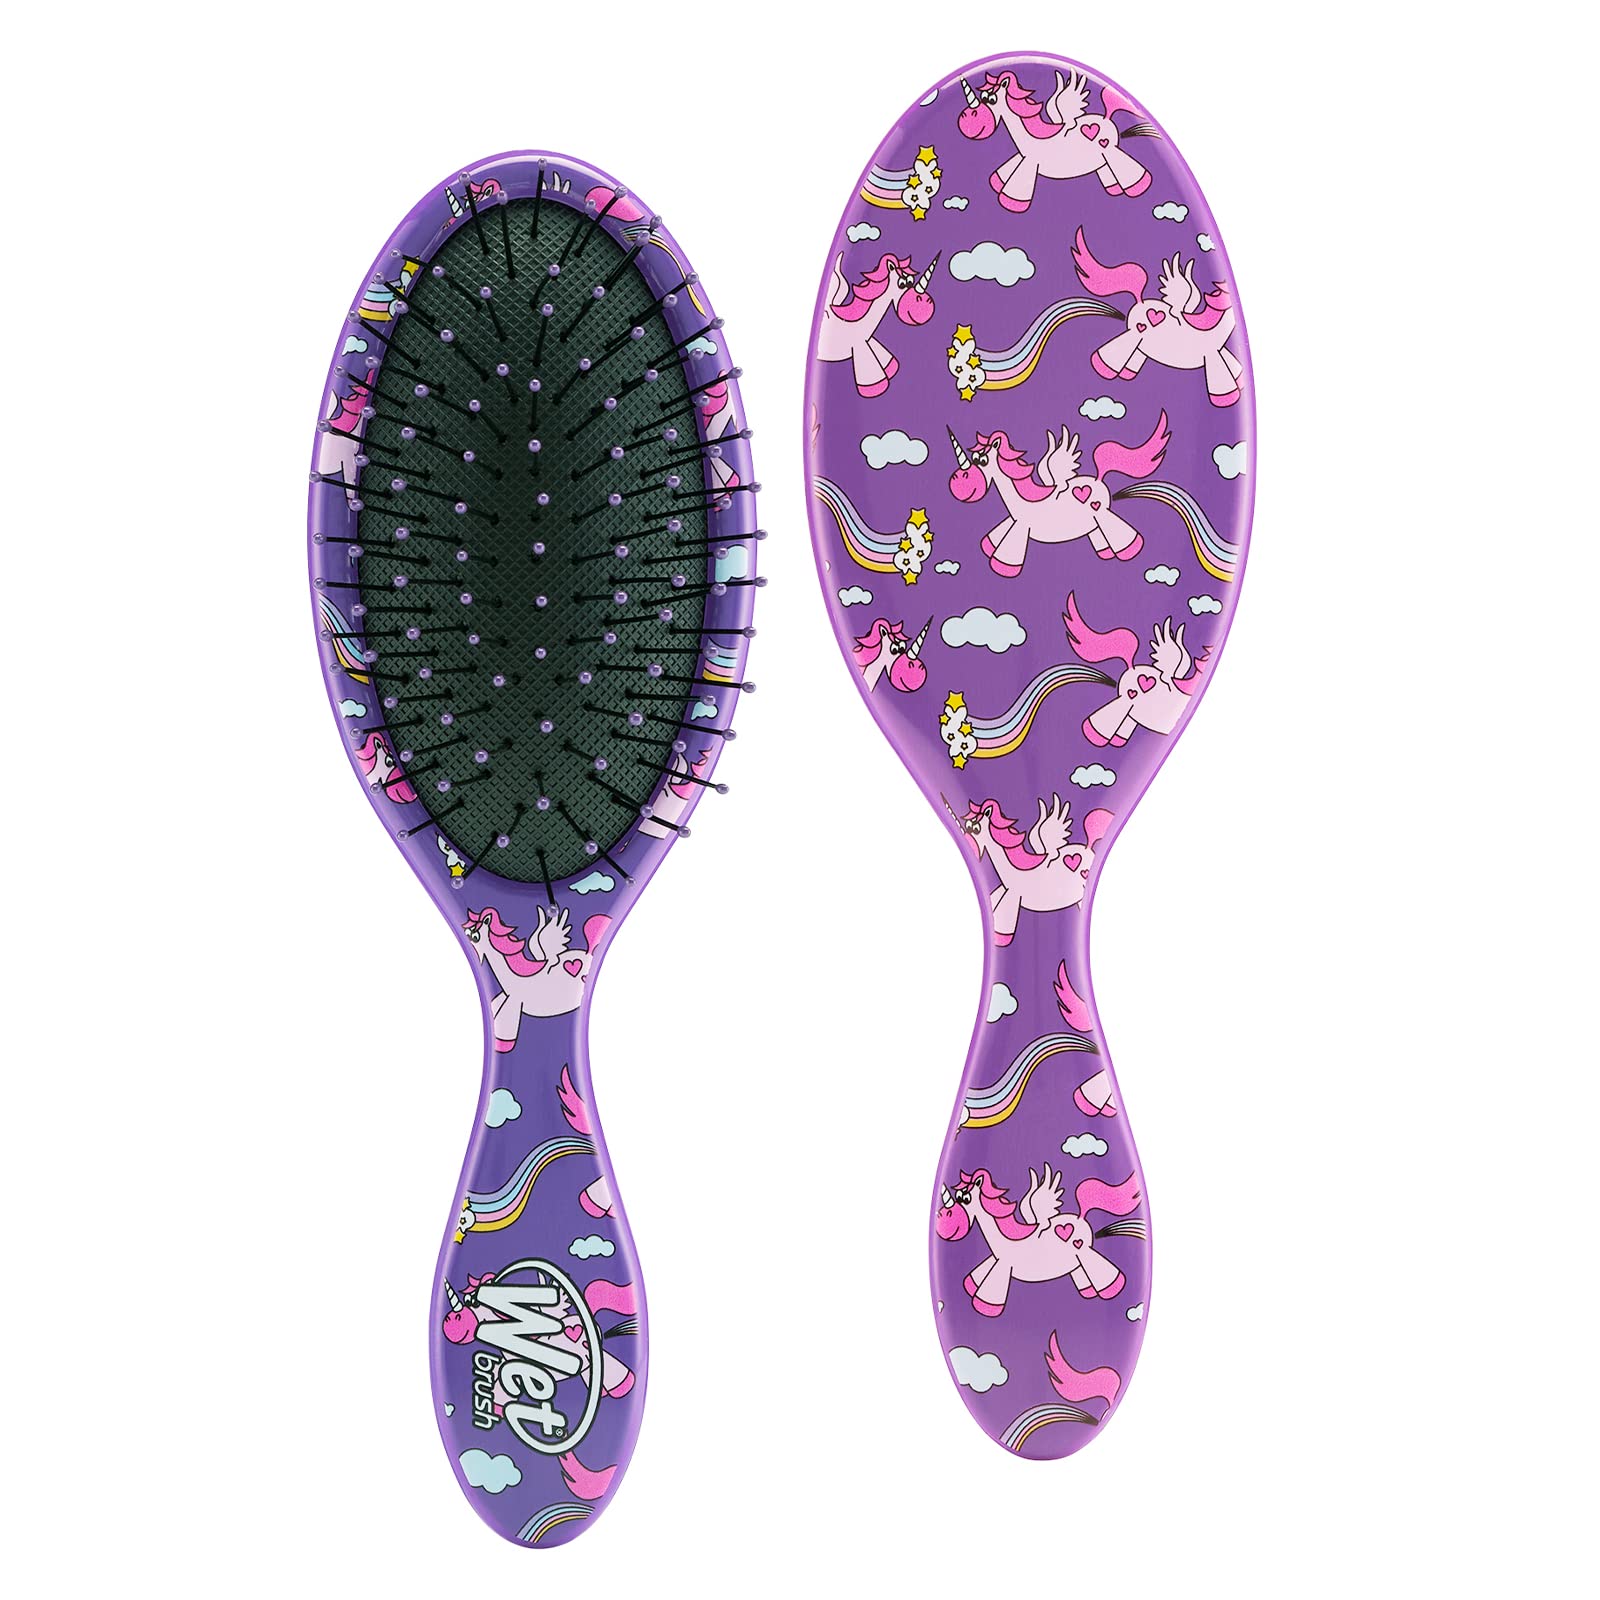 Wet Brush Thick Hair Detangling Brush, Pink - Ultra-Soft IntelliFlex  Bristles Glide Through Tangles With Ease - Pain-Free Detangler for All Hair